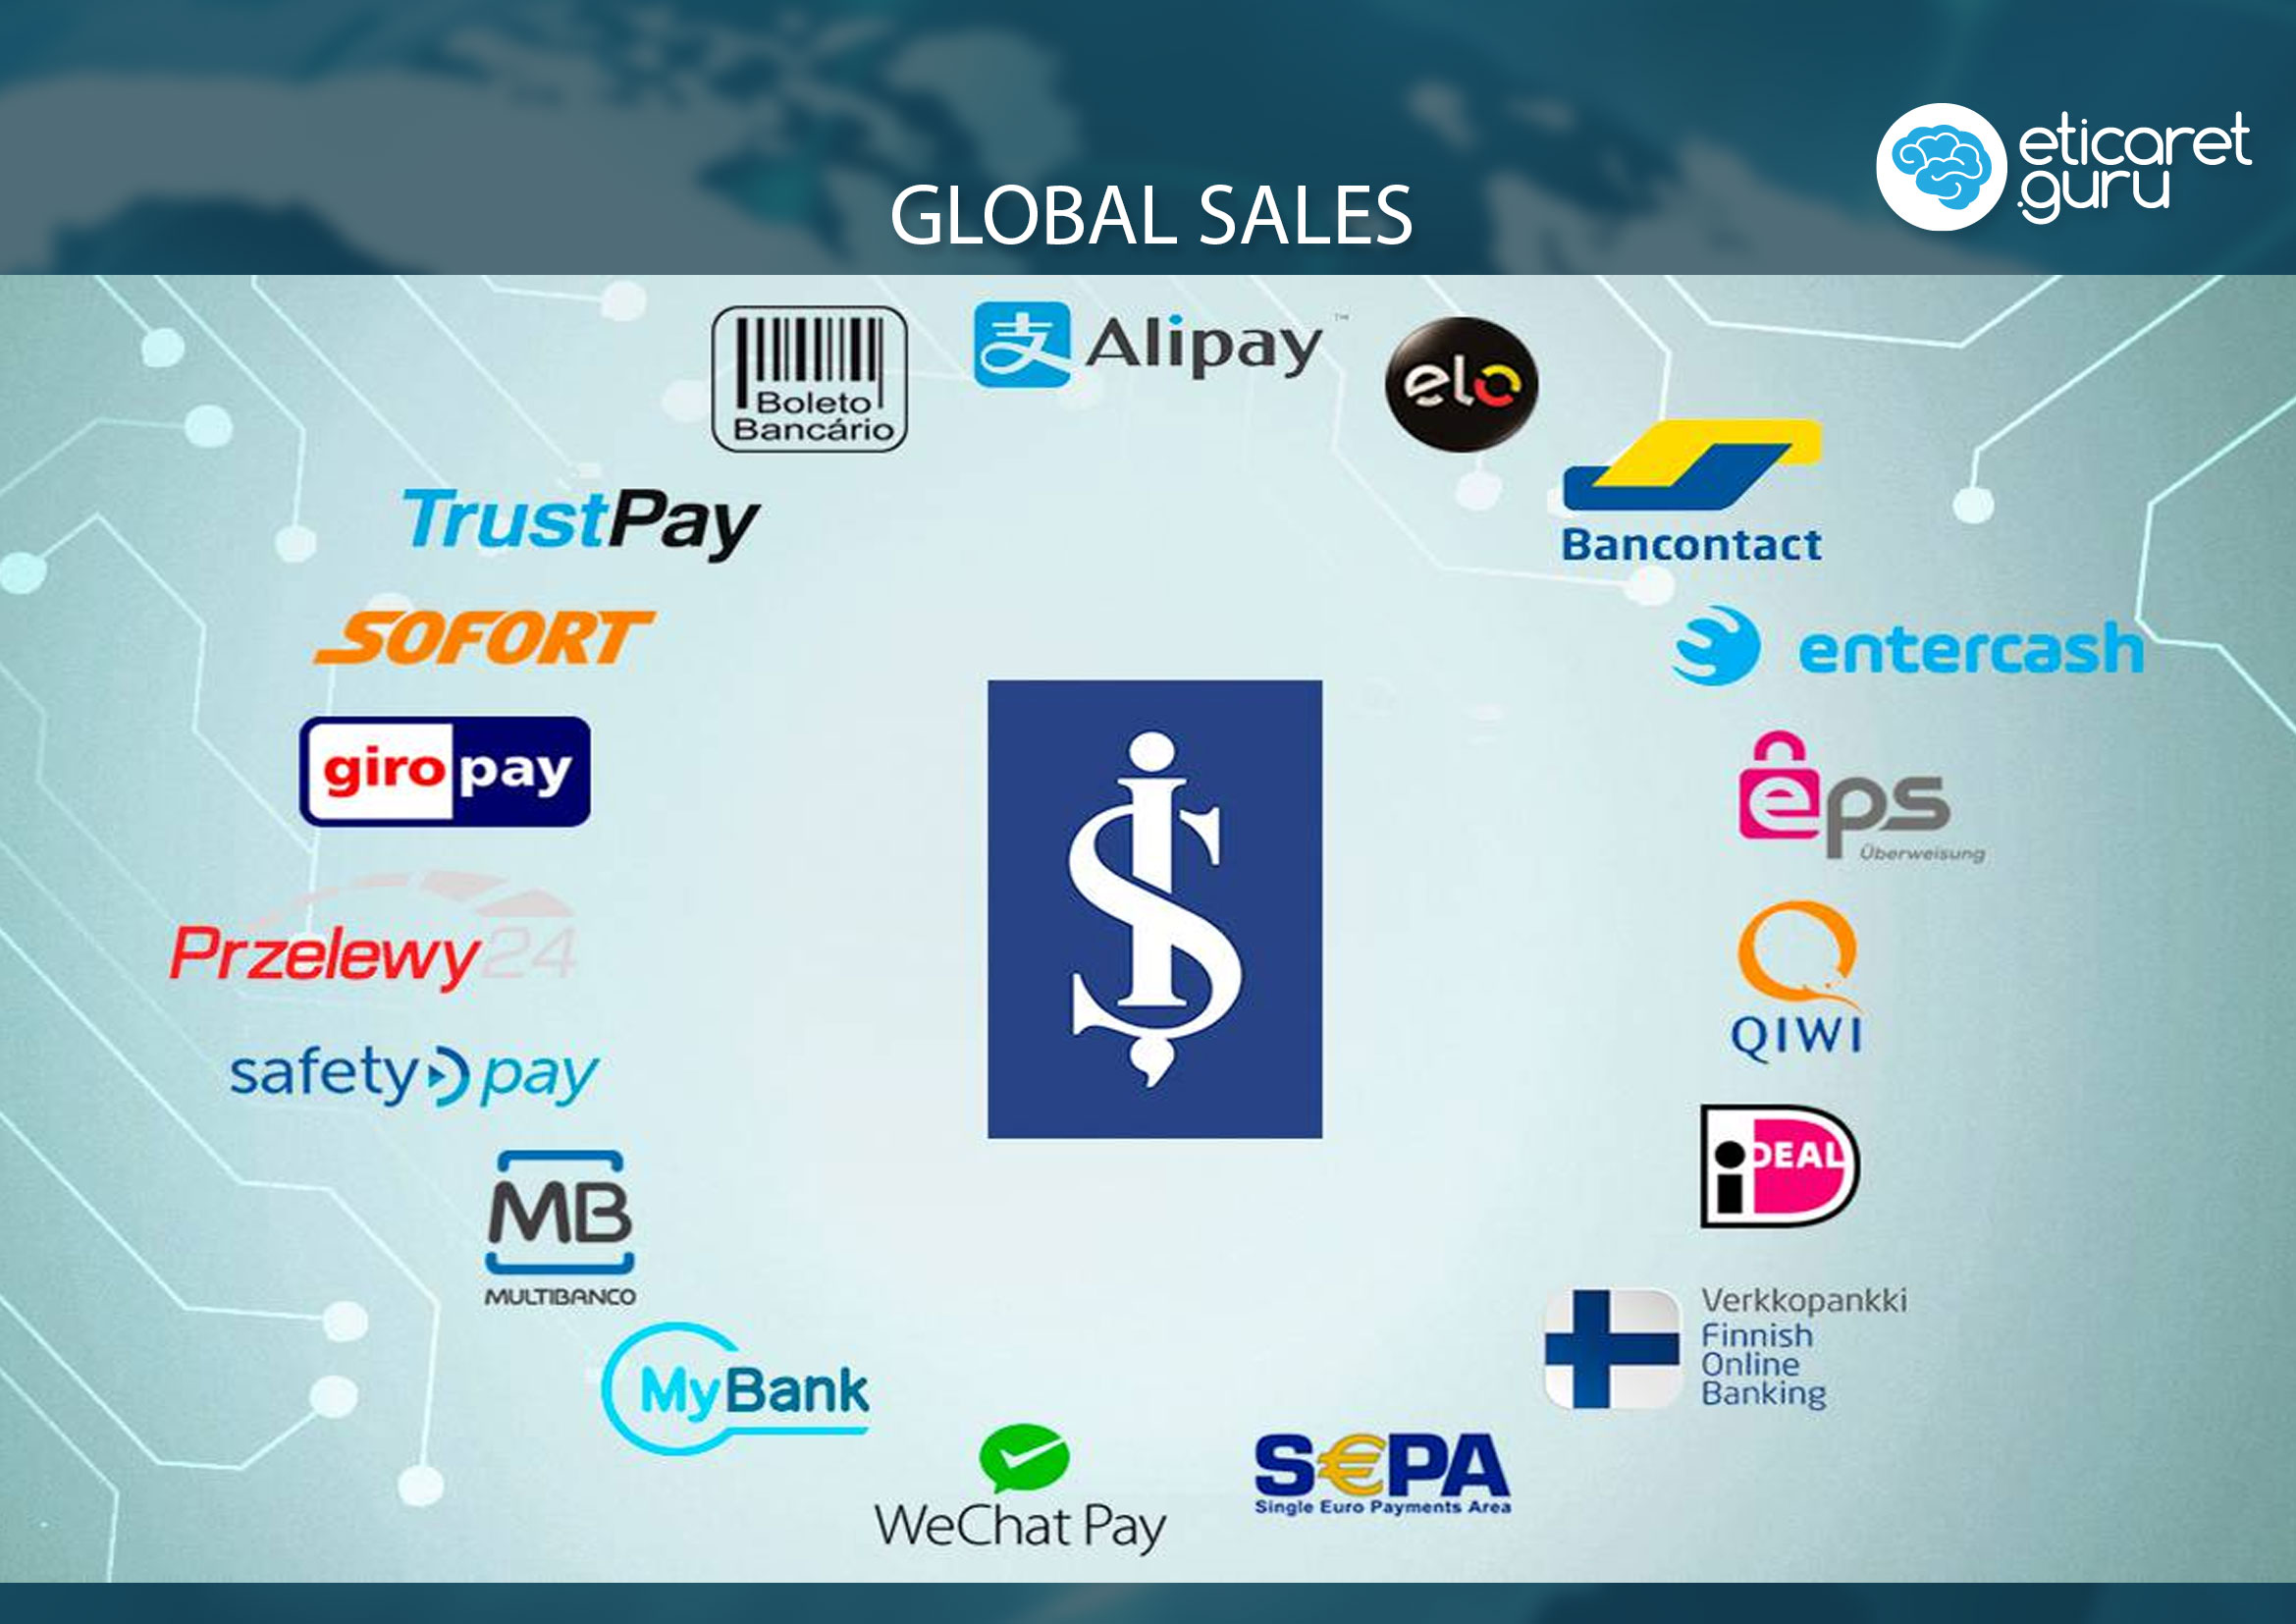 Global Sales - Alternative Payment